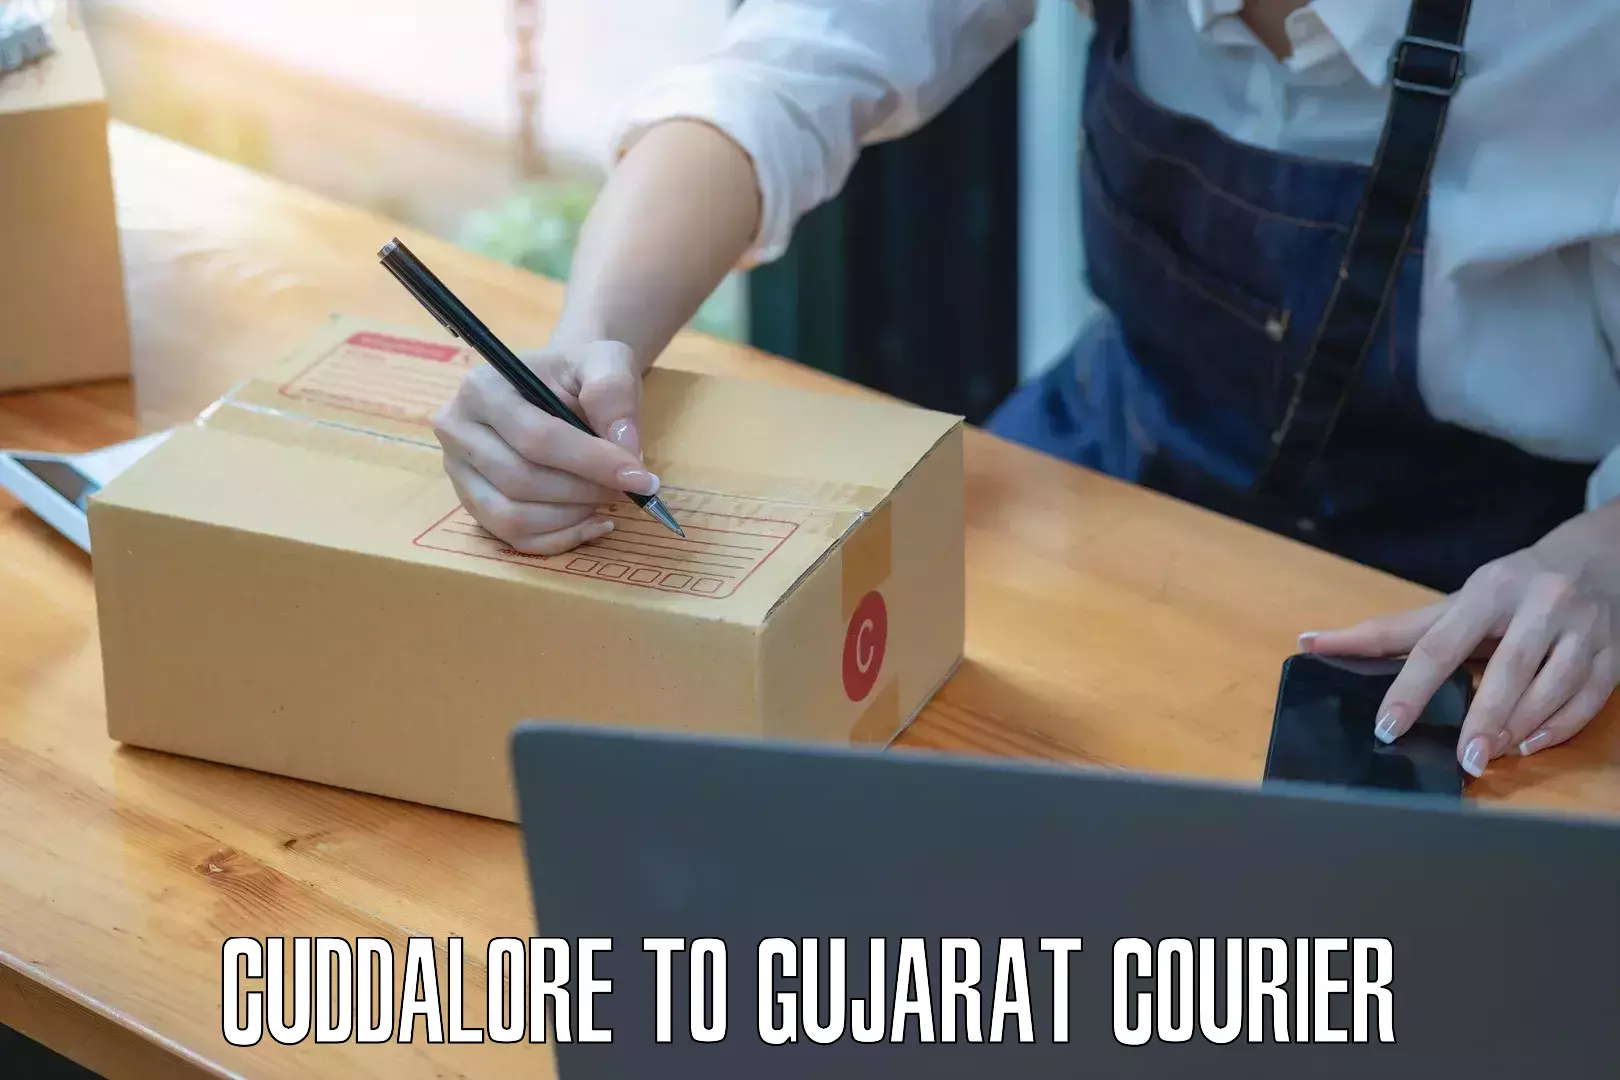 Express delivery capabilities Cuddalore to Gujarat